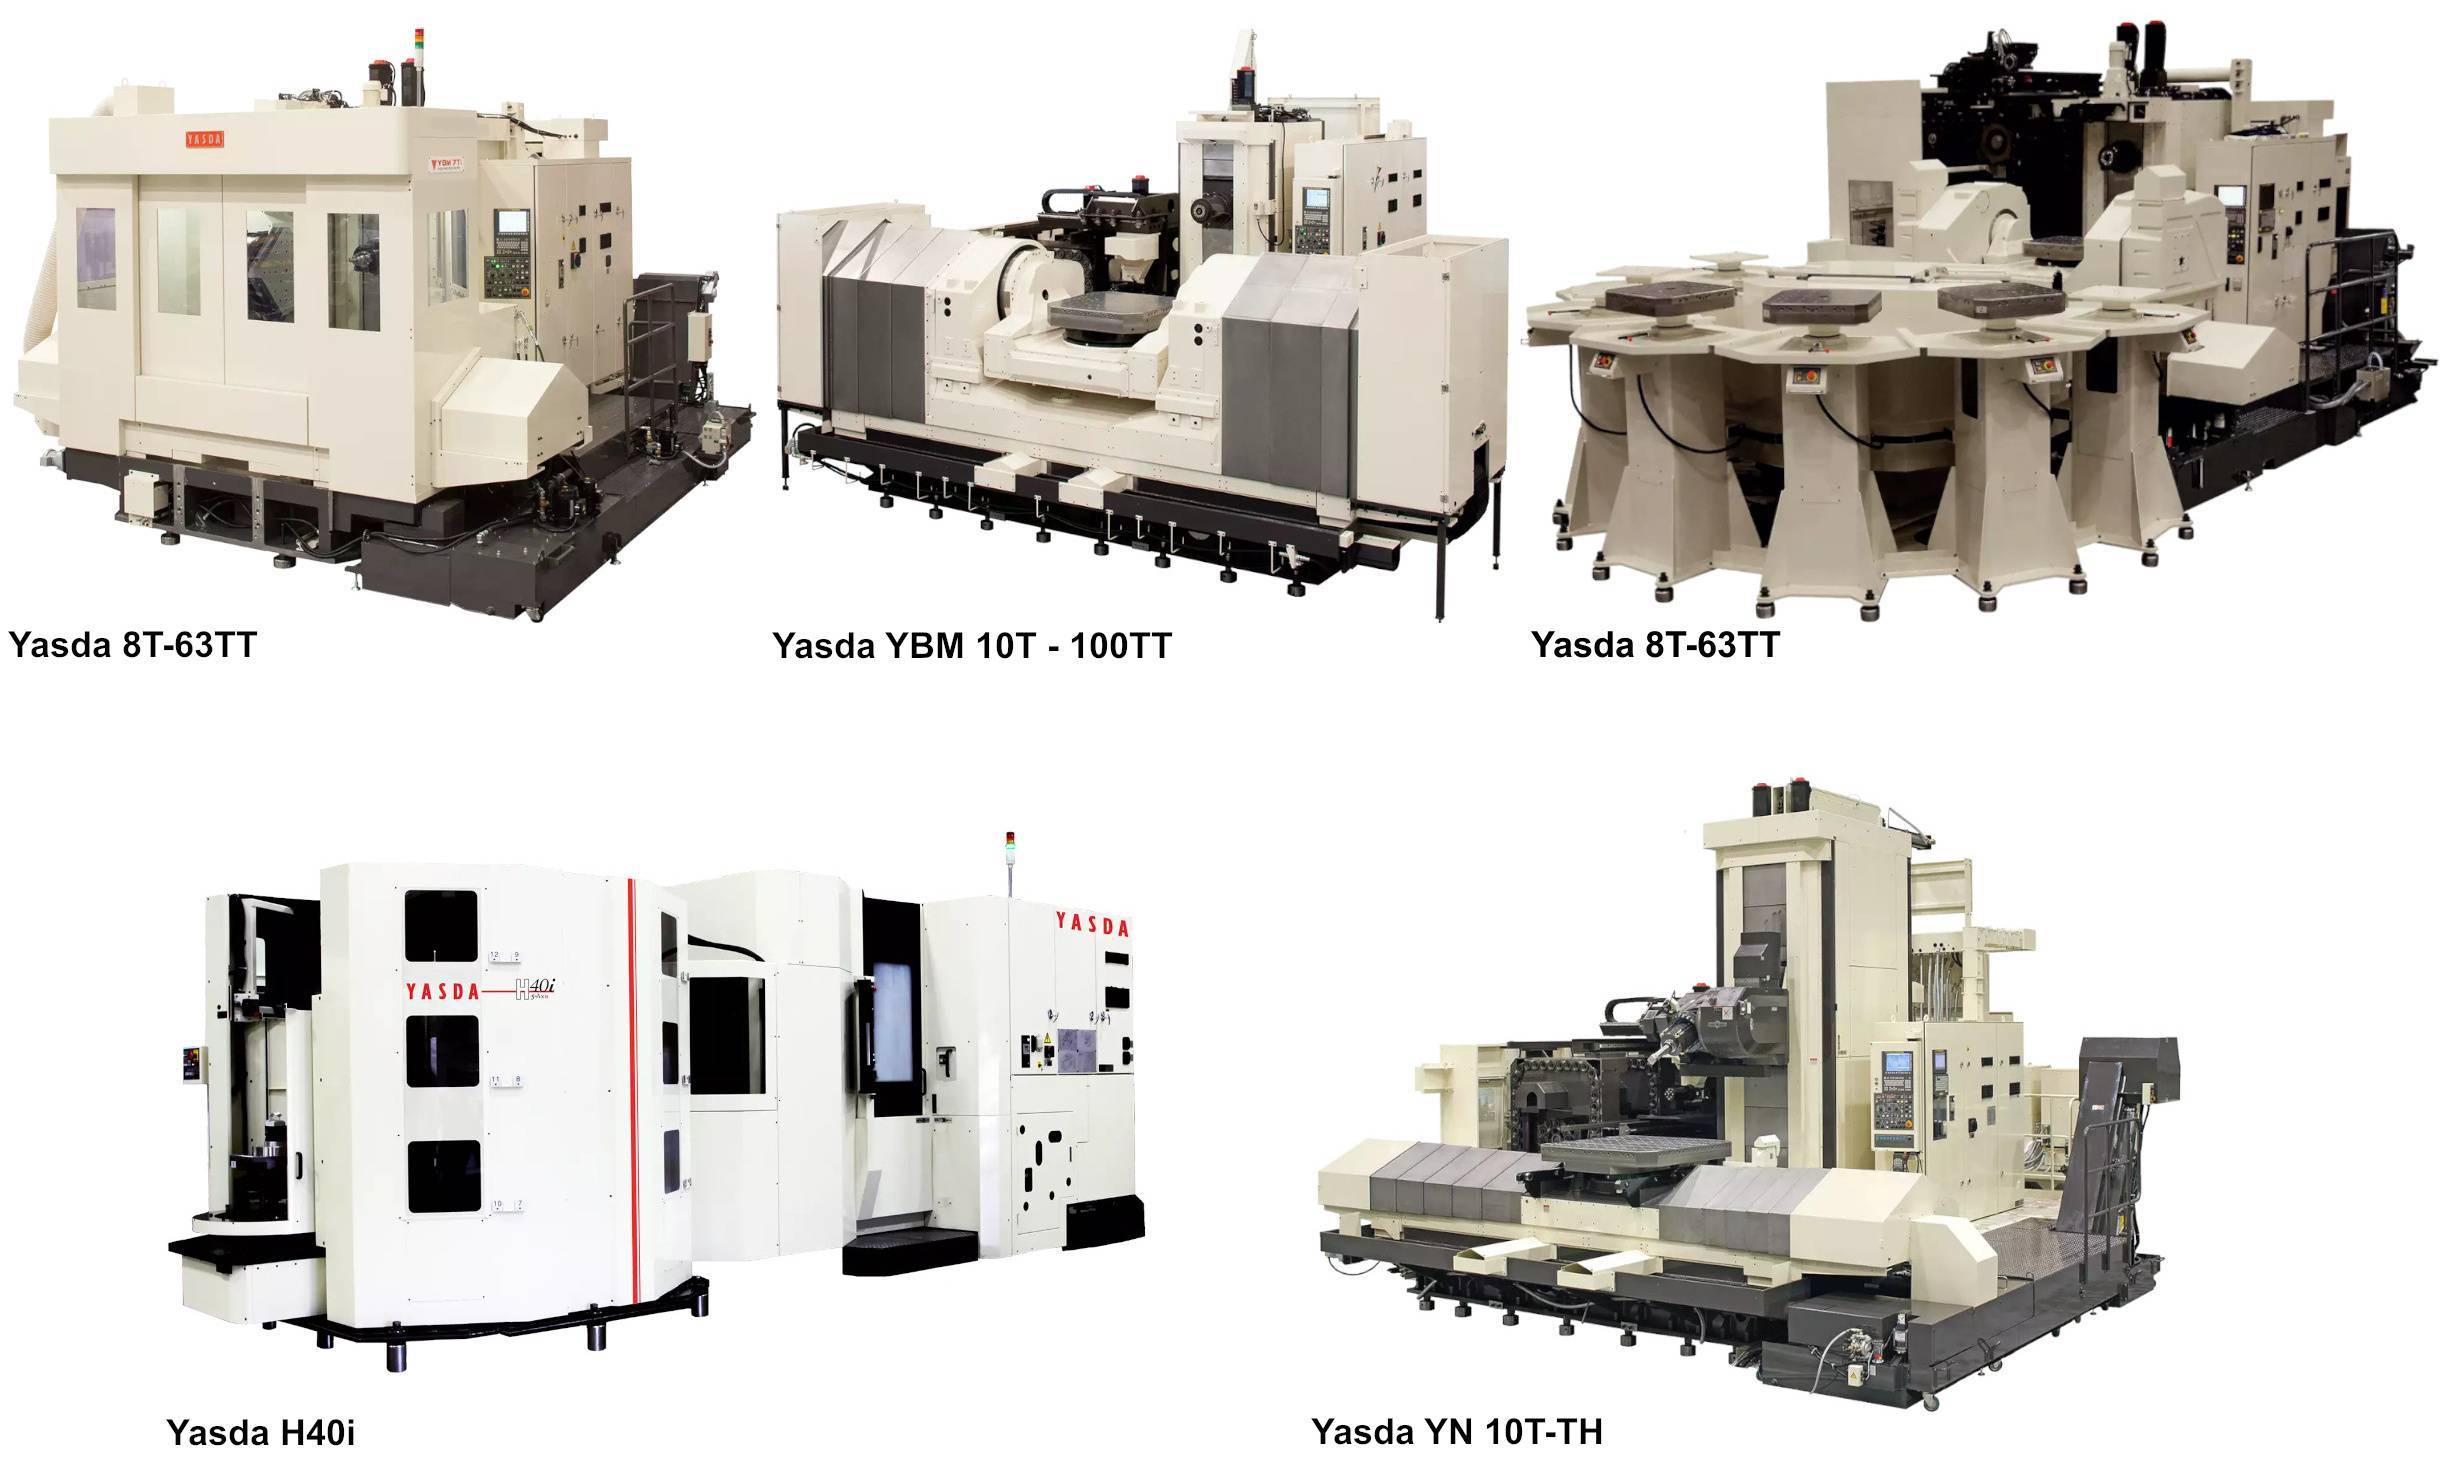 Image of Yasda machines